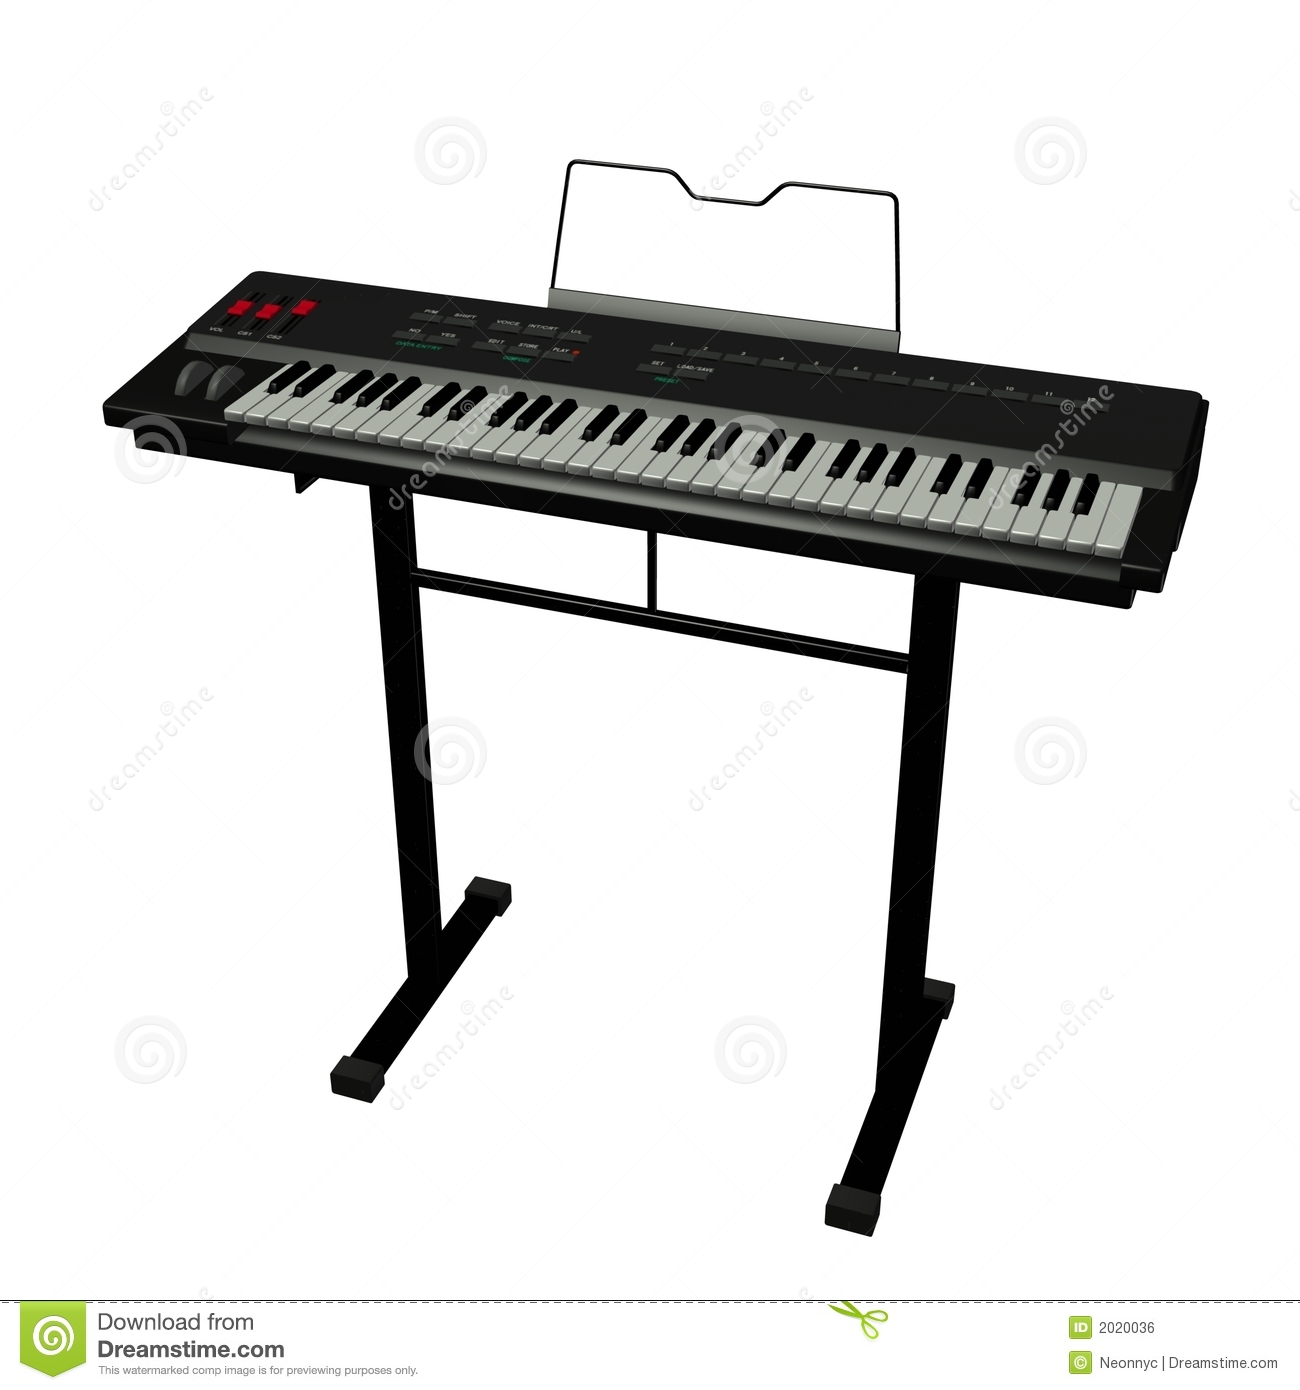 Digital Illustration Of Electric Keyboard Midi Against A White